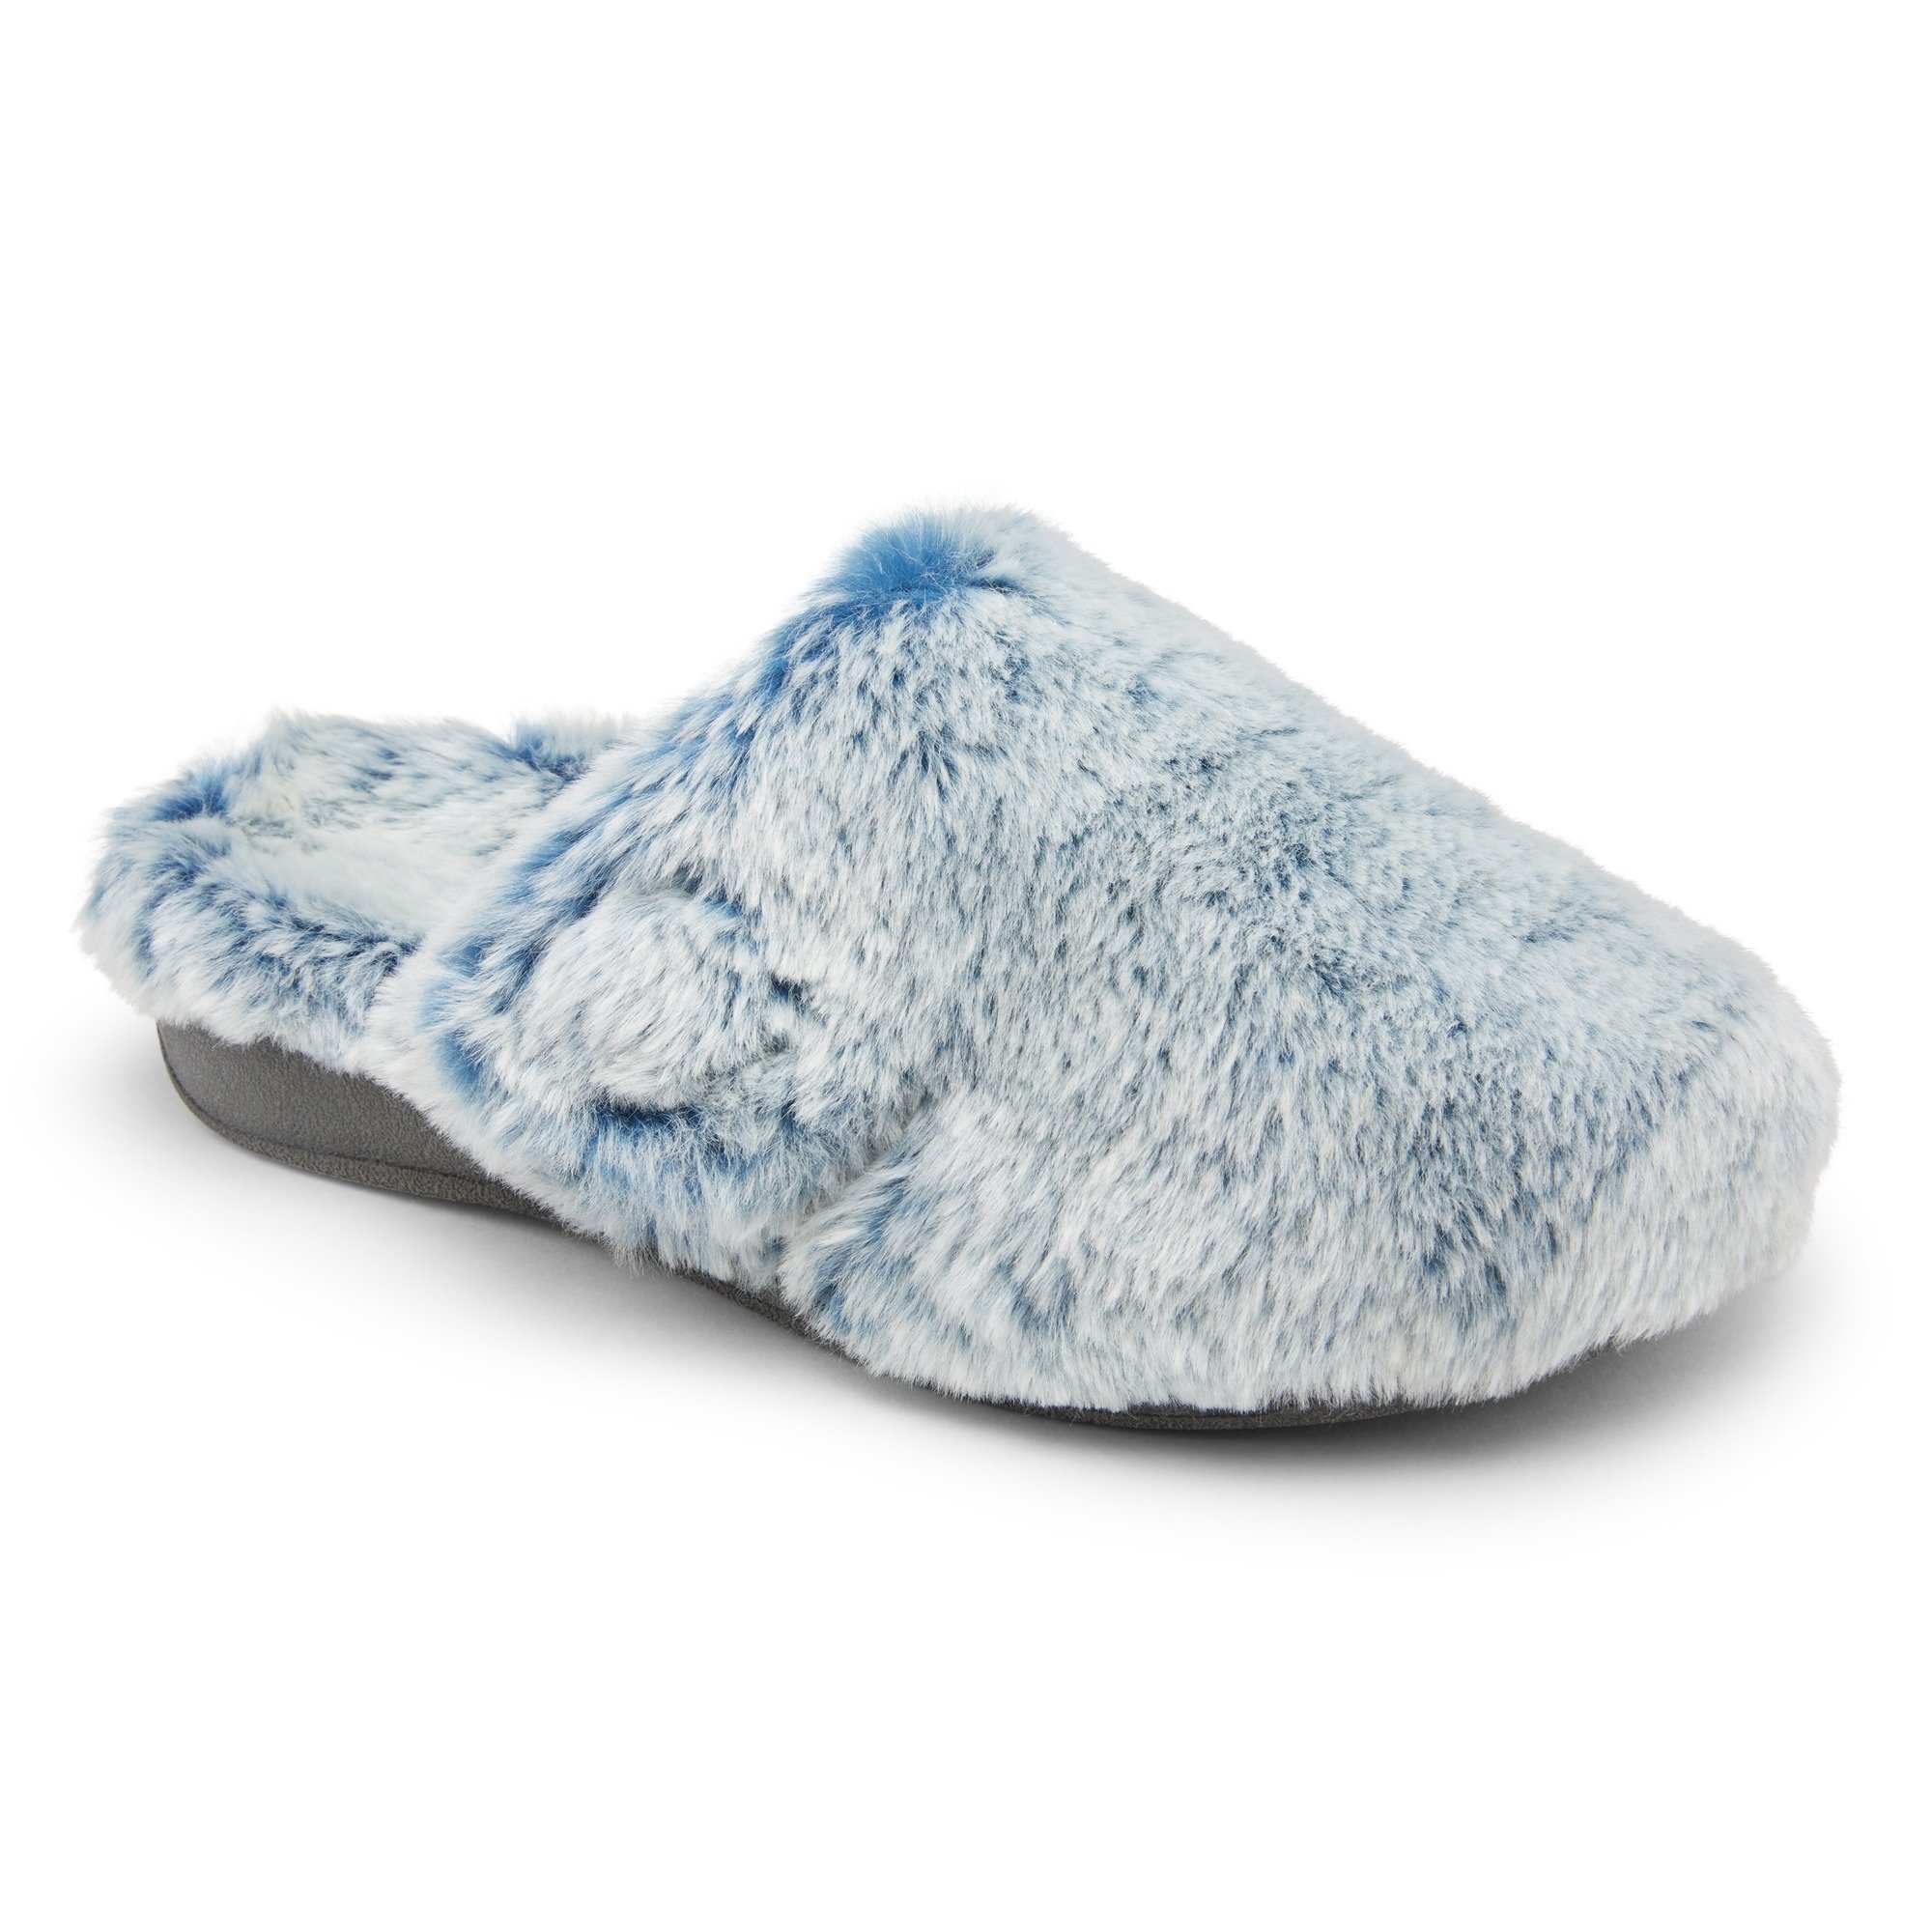 vionic gemma slippers canada